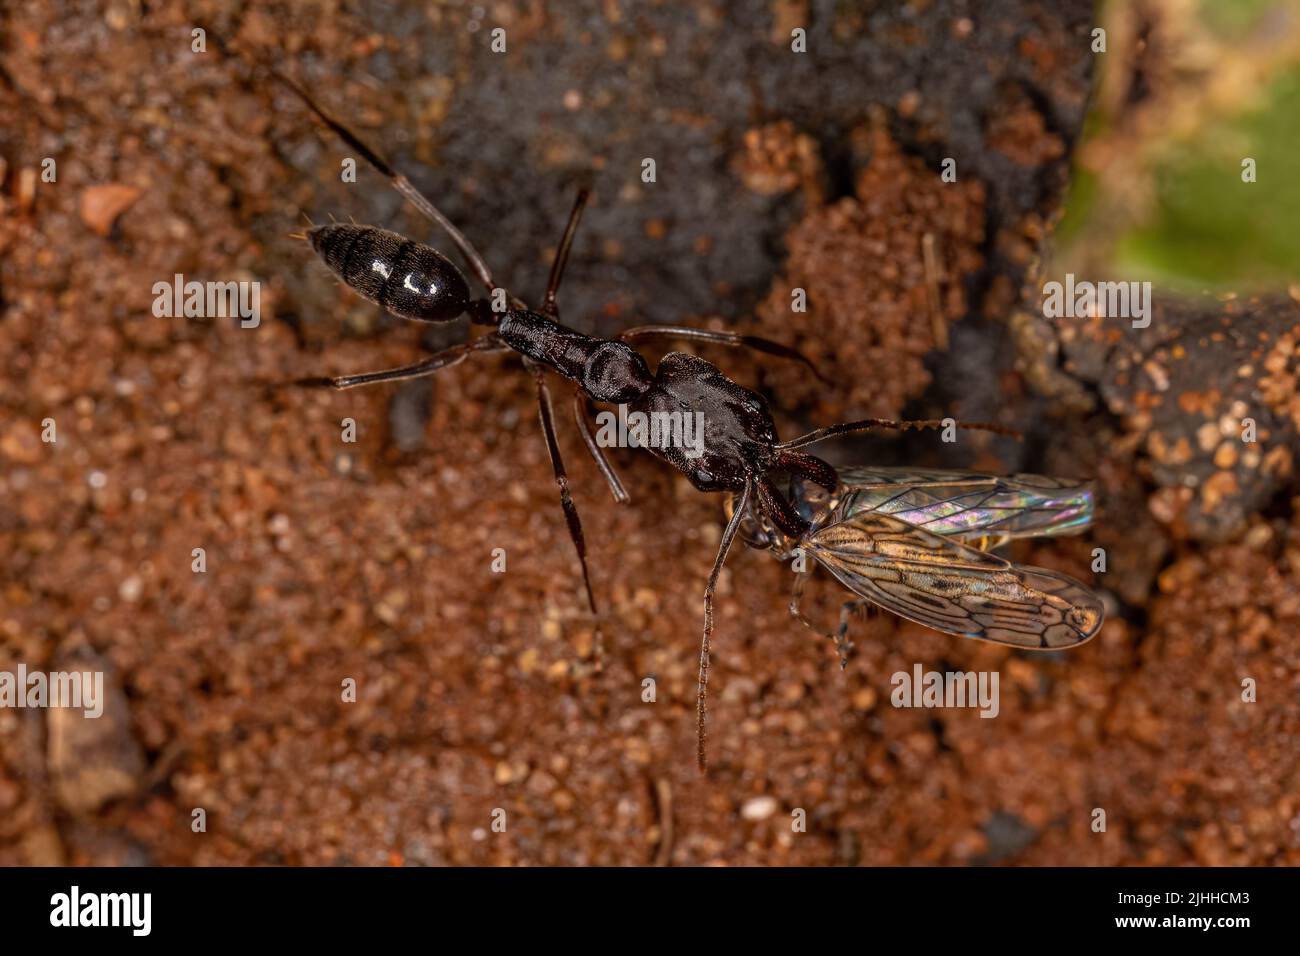 Adulto Trap-jaw Ant del género Odontomachus que lleva un adulto muerto típico leafhopper de la Familia Cicadellidae Foto de stock